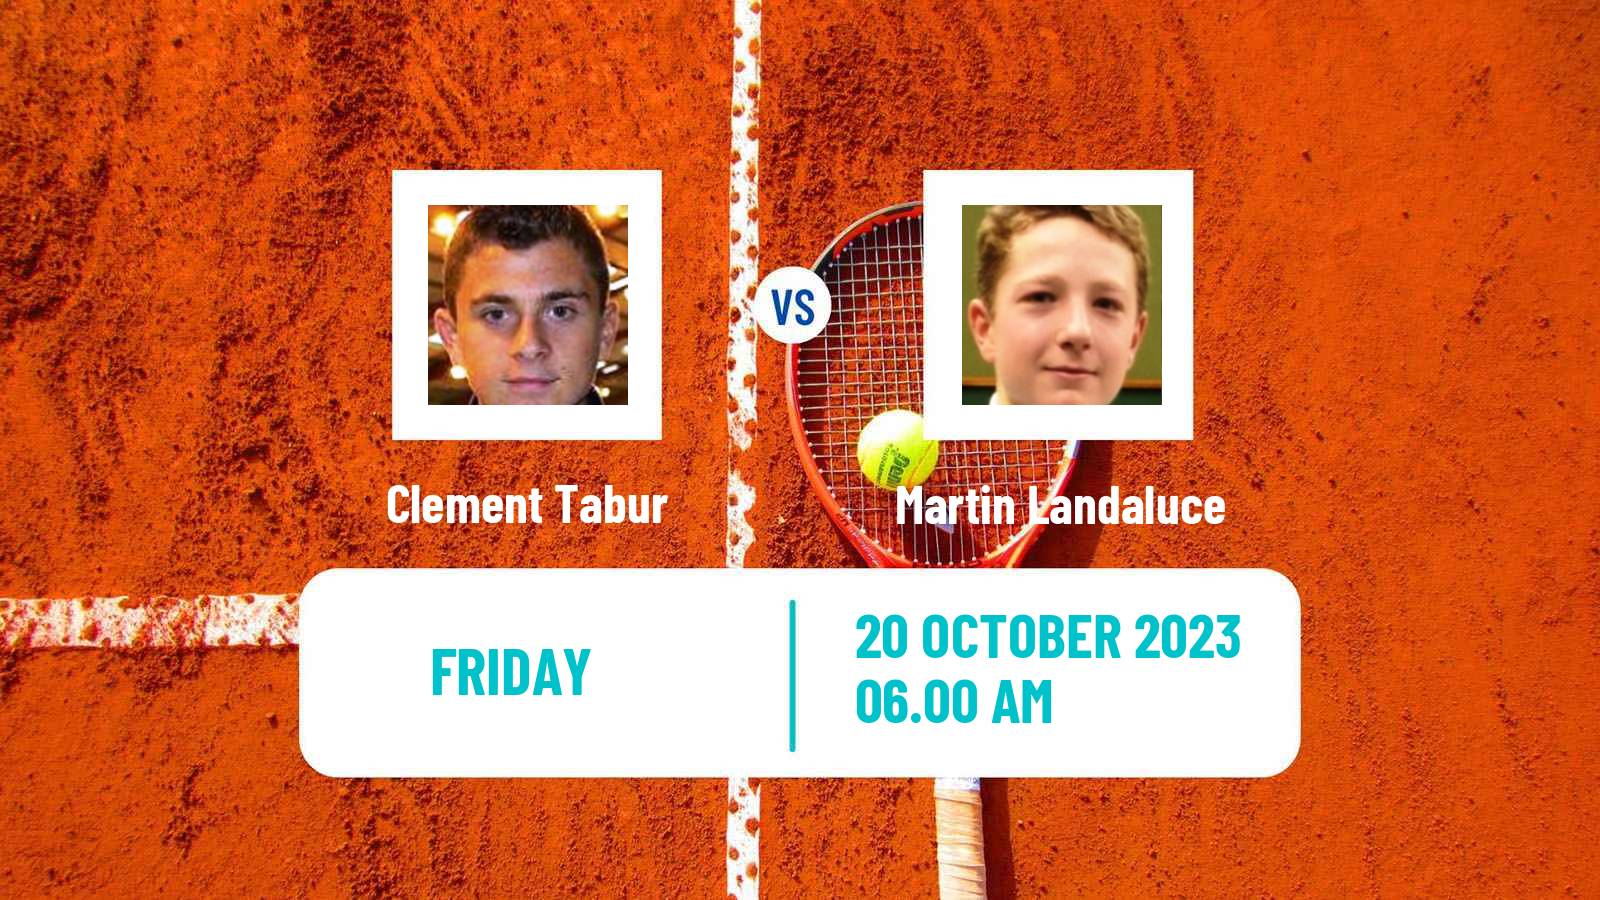 Tennis ITF M25 Tavira 2 Men Clement Tabur - Martin Landaluce